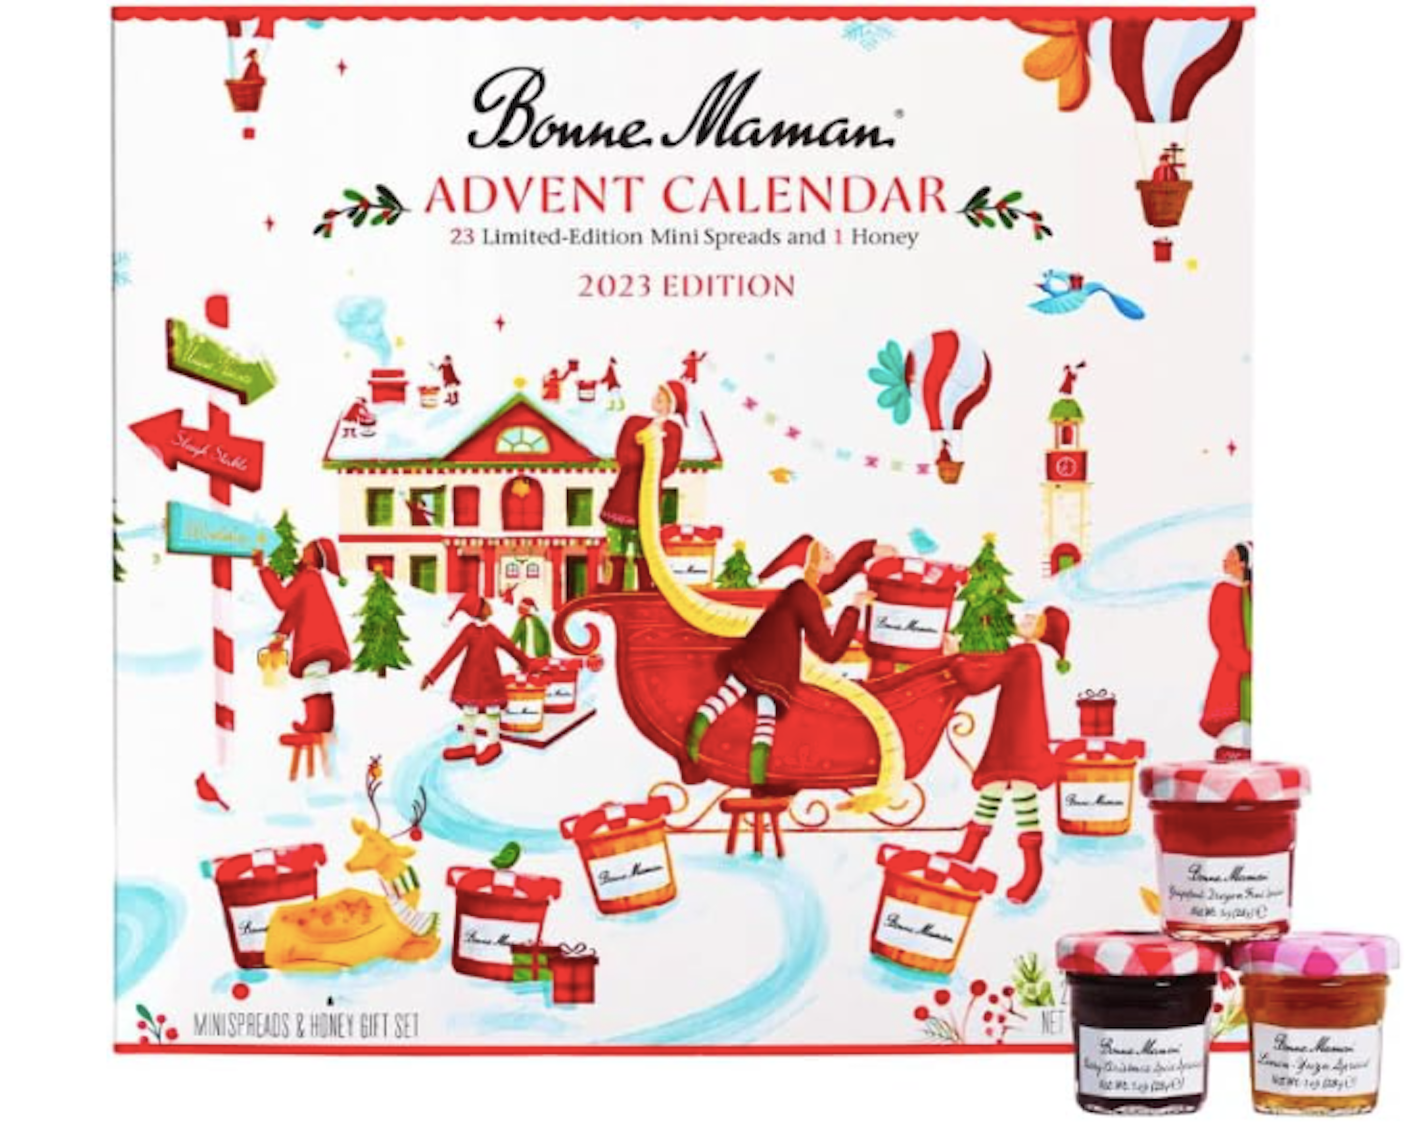 A festive Christmas advent calendar surrounded by jars of jam